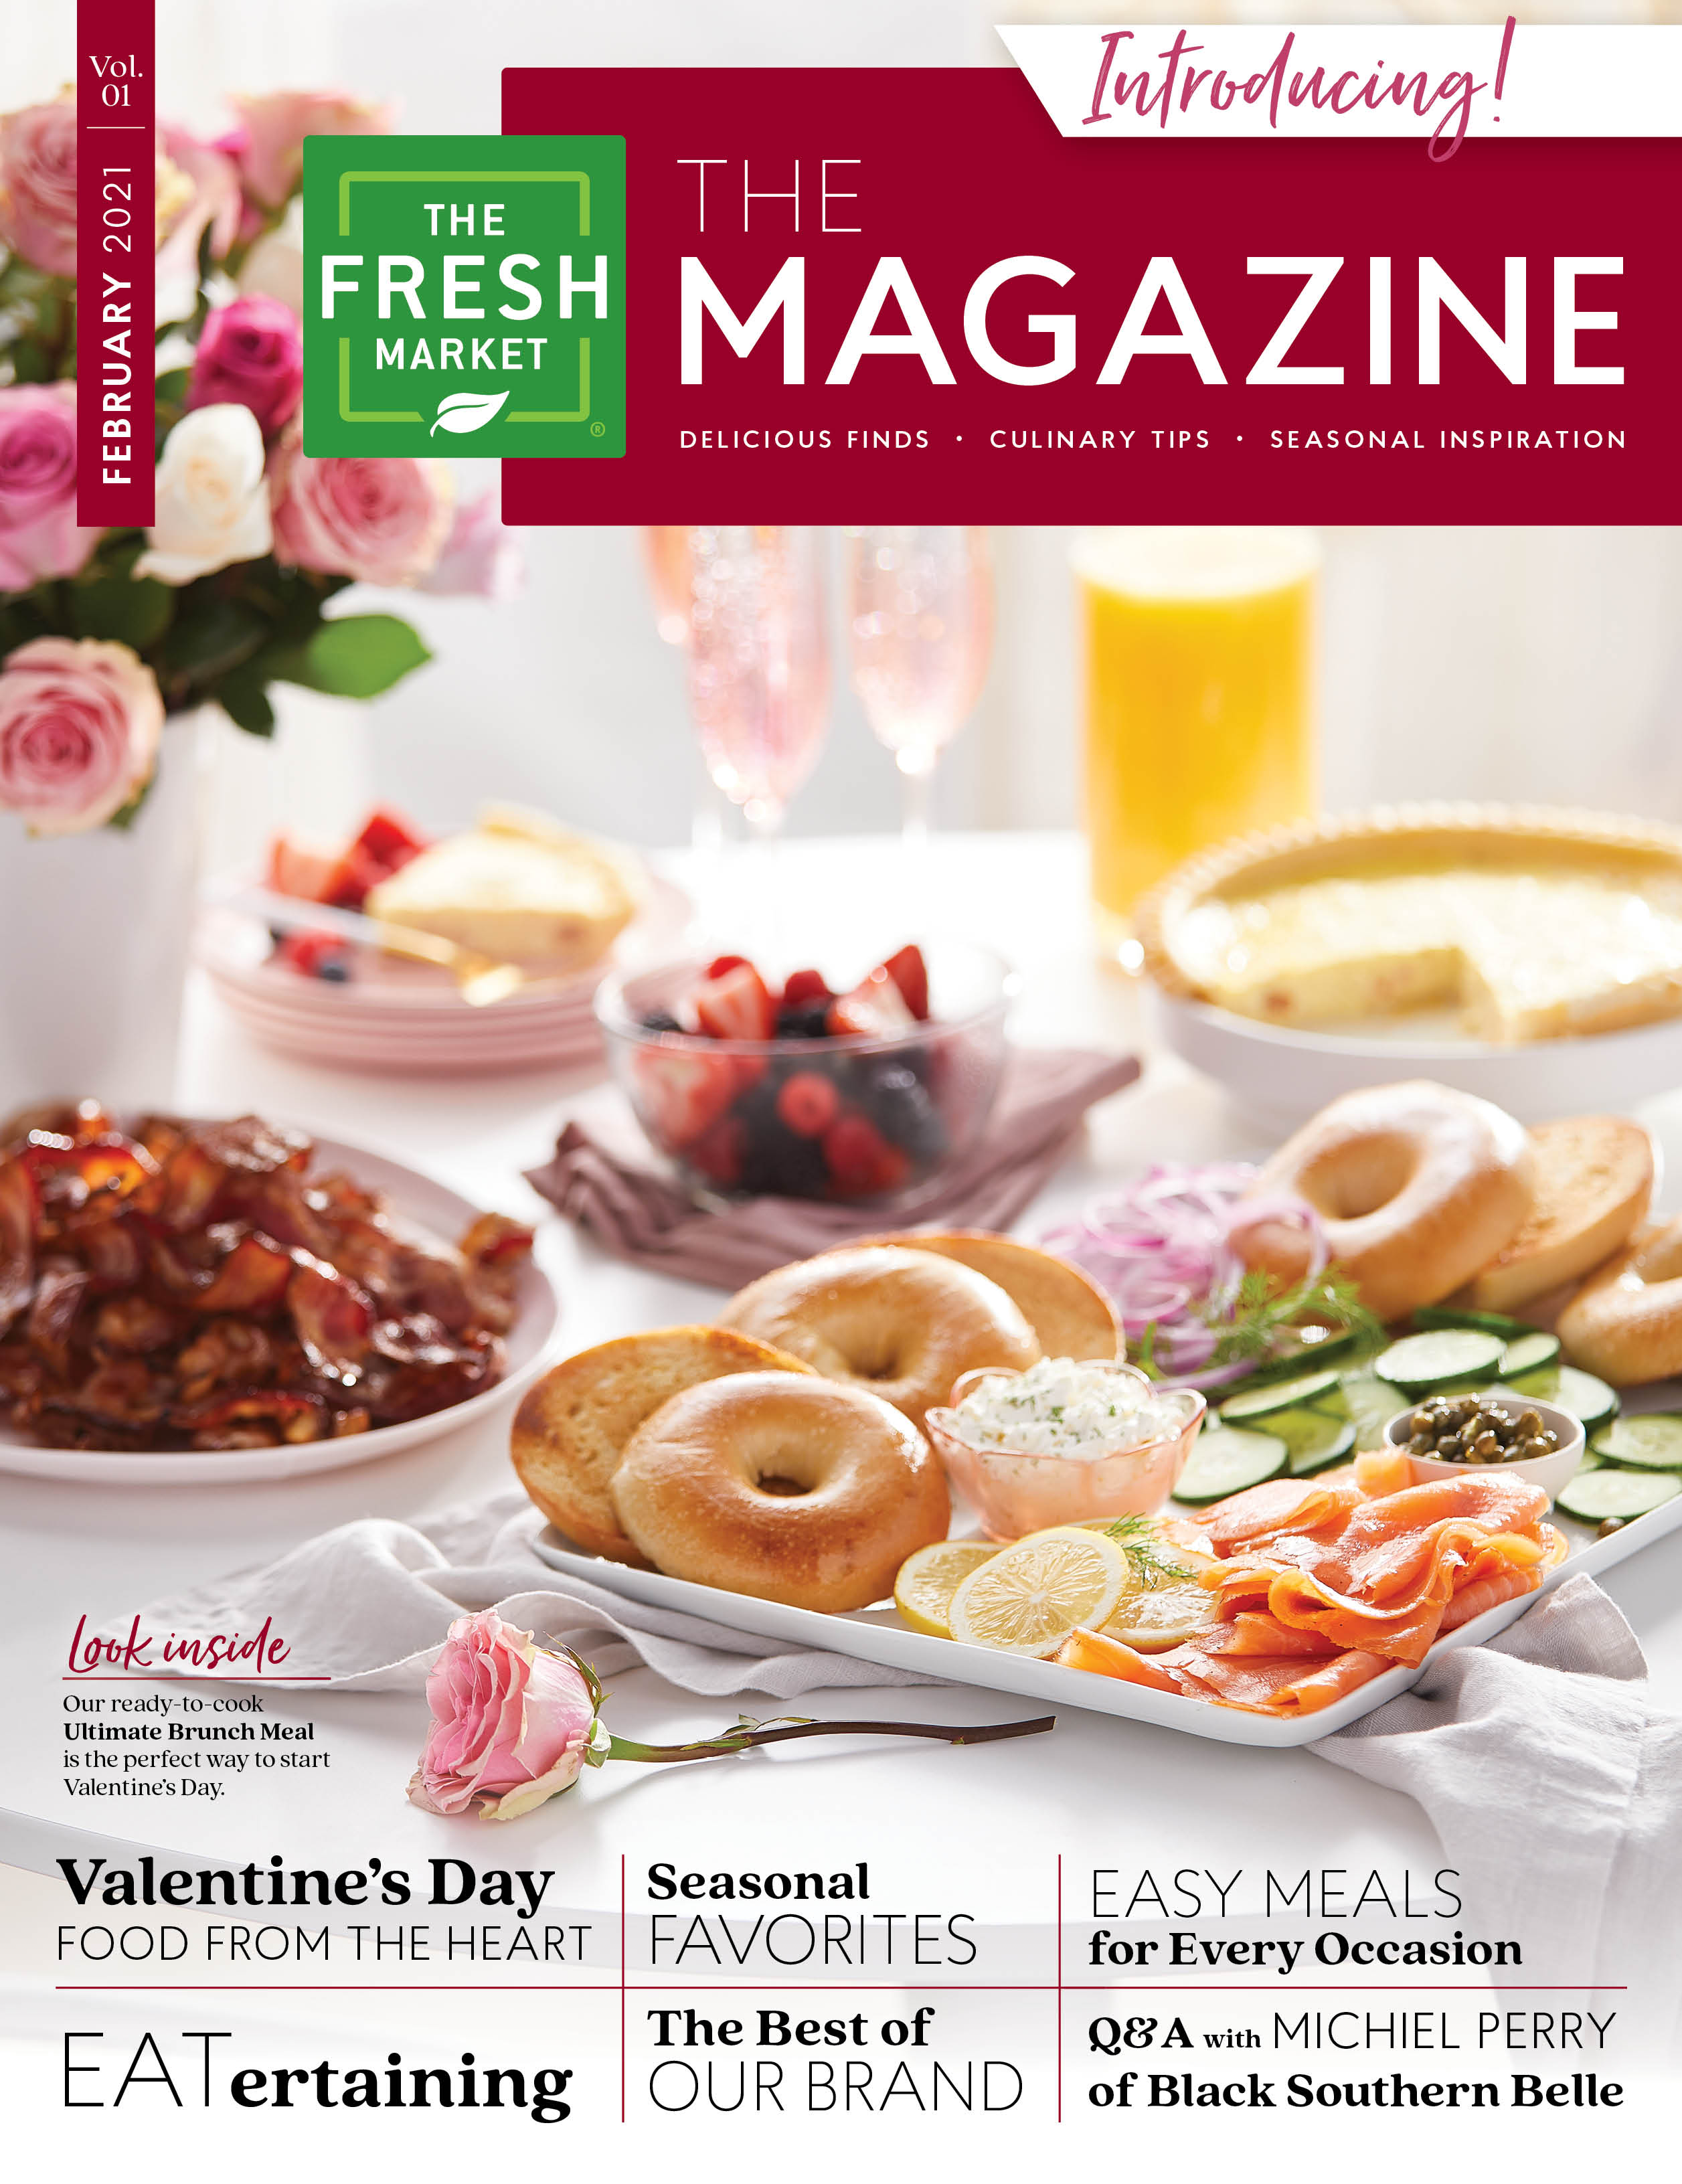 The Fresh Market February 2021 Magazine Cover